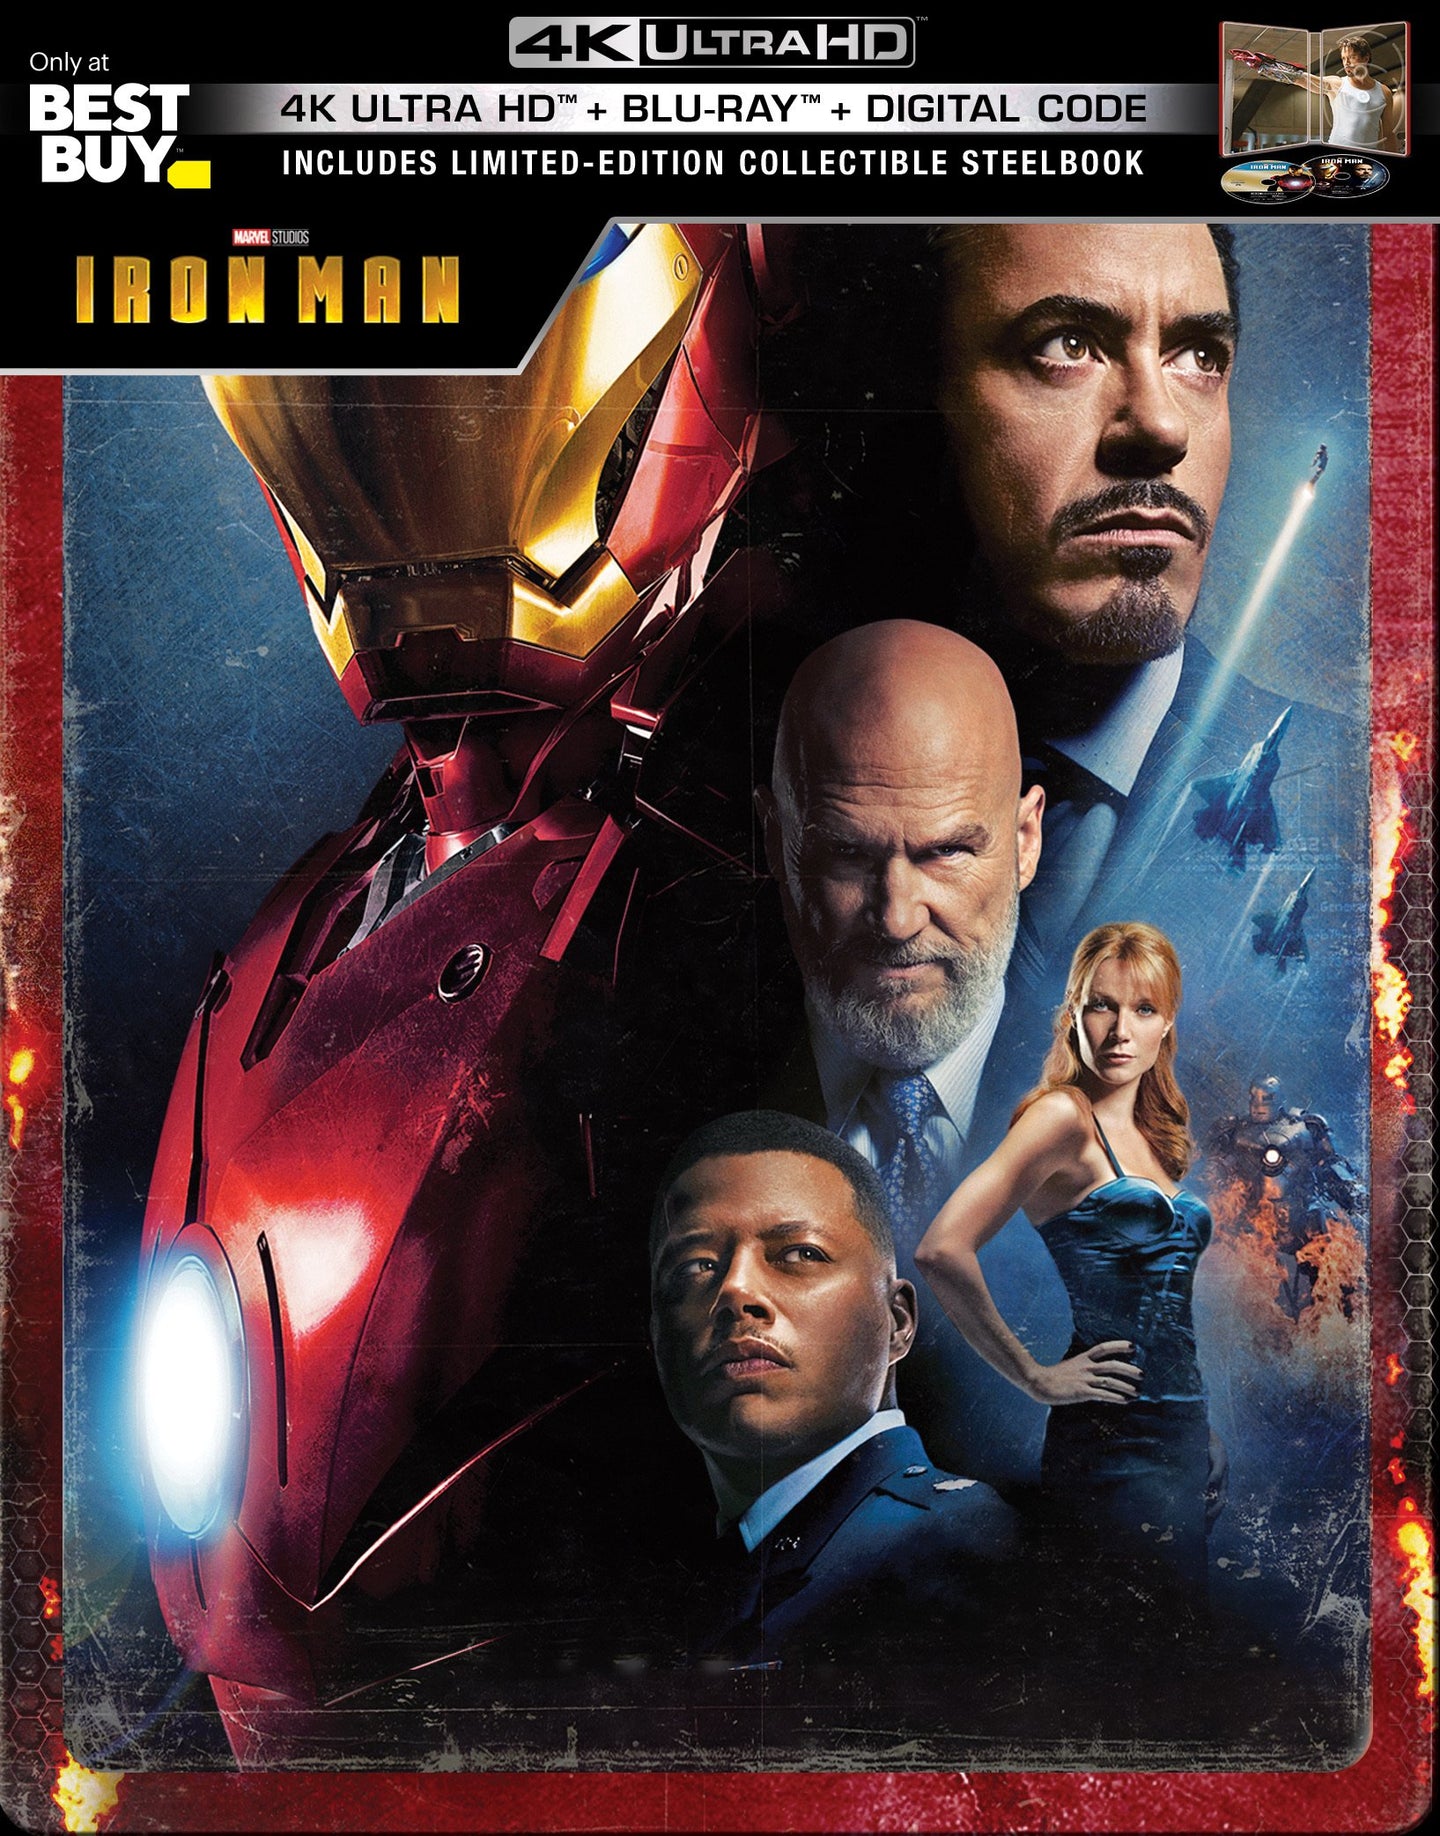 Iron Man (2008: Ports Via MA) iTunes 4K code